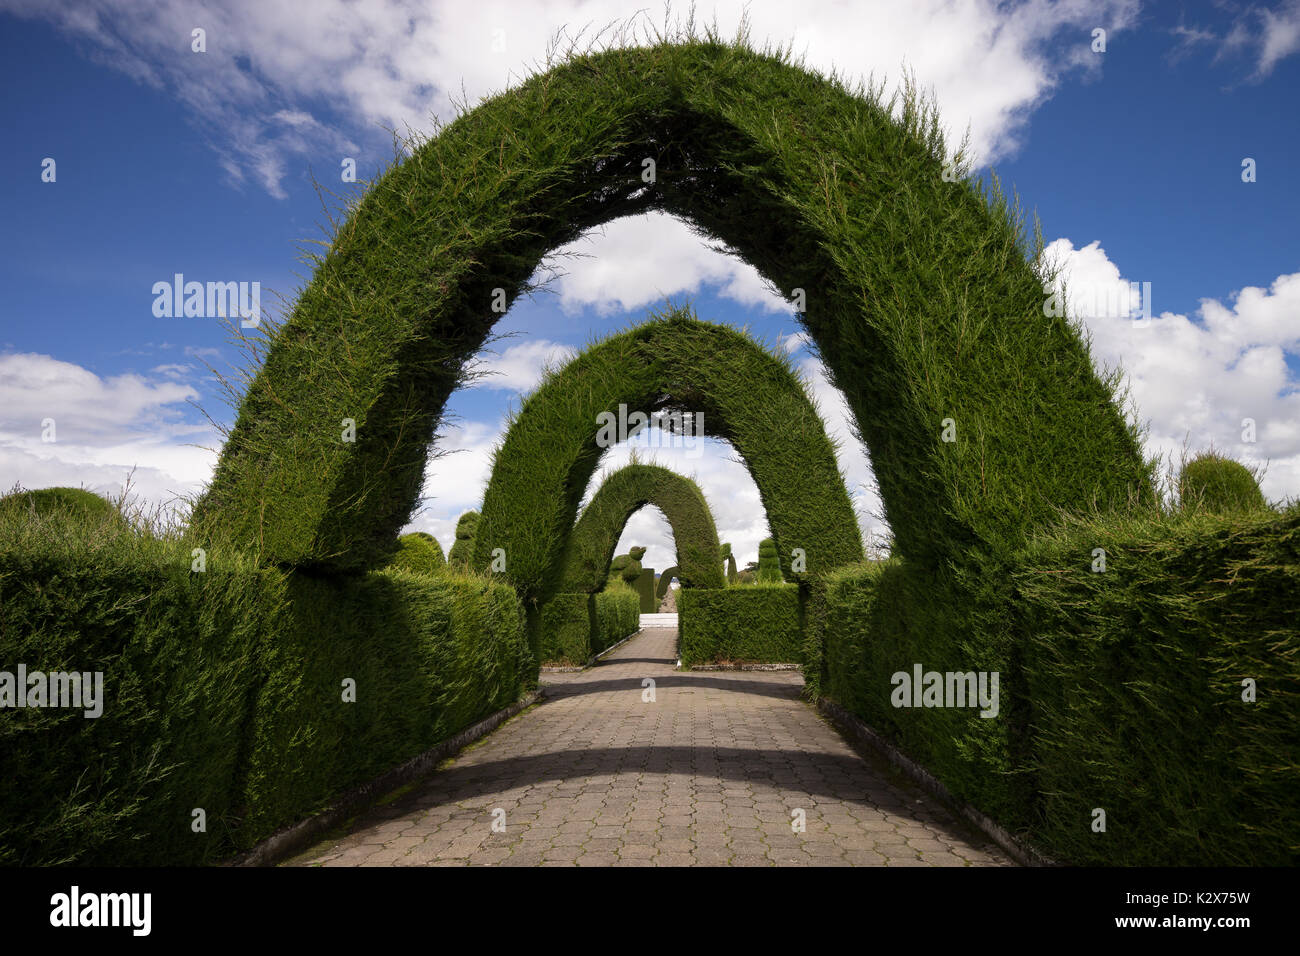 Immergrune Zypresse Topiary In Der Tulcan Ecuador Friedhof Zu